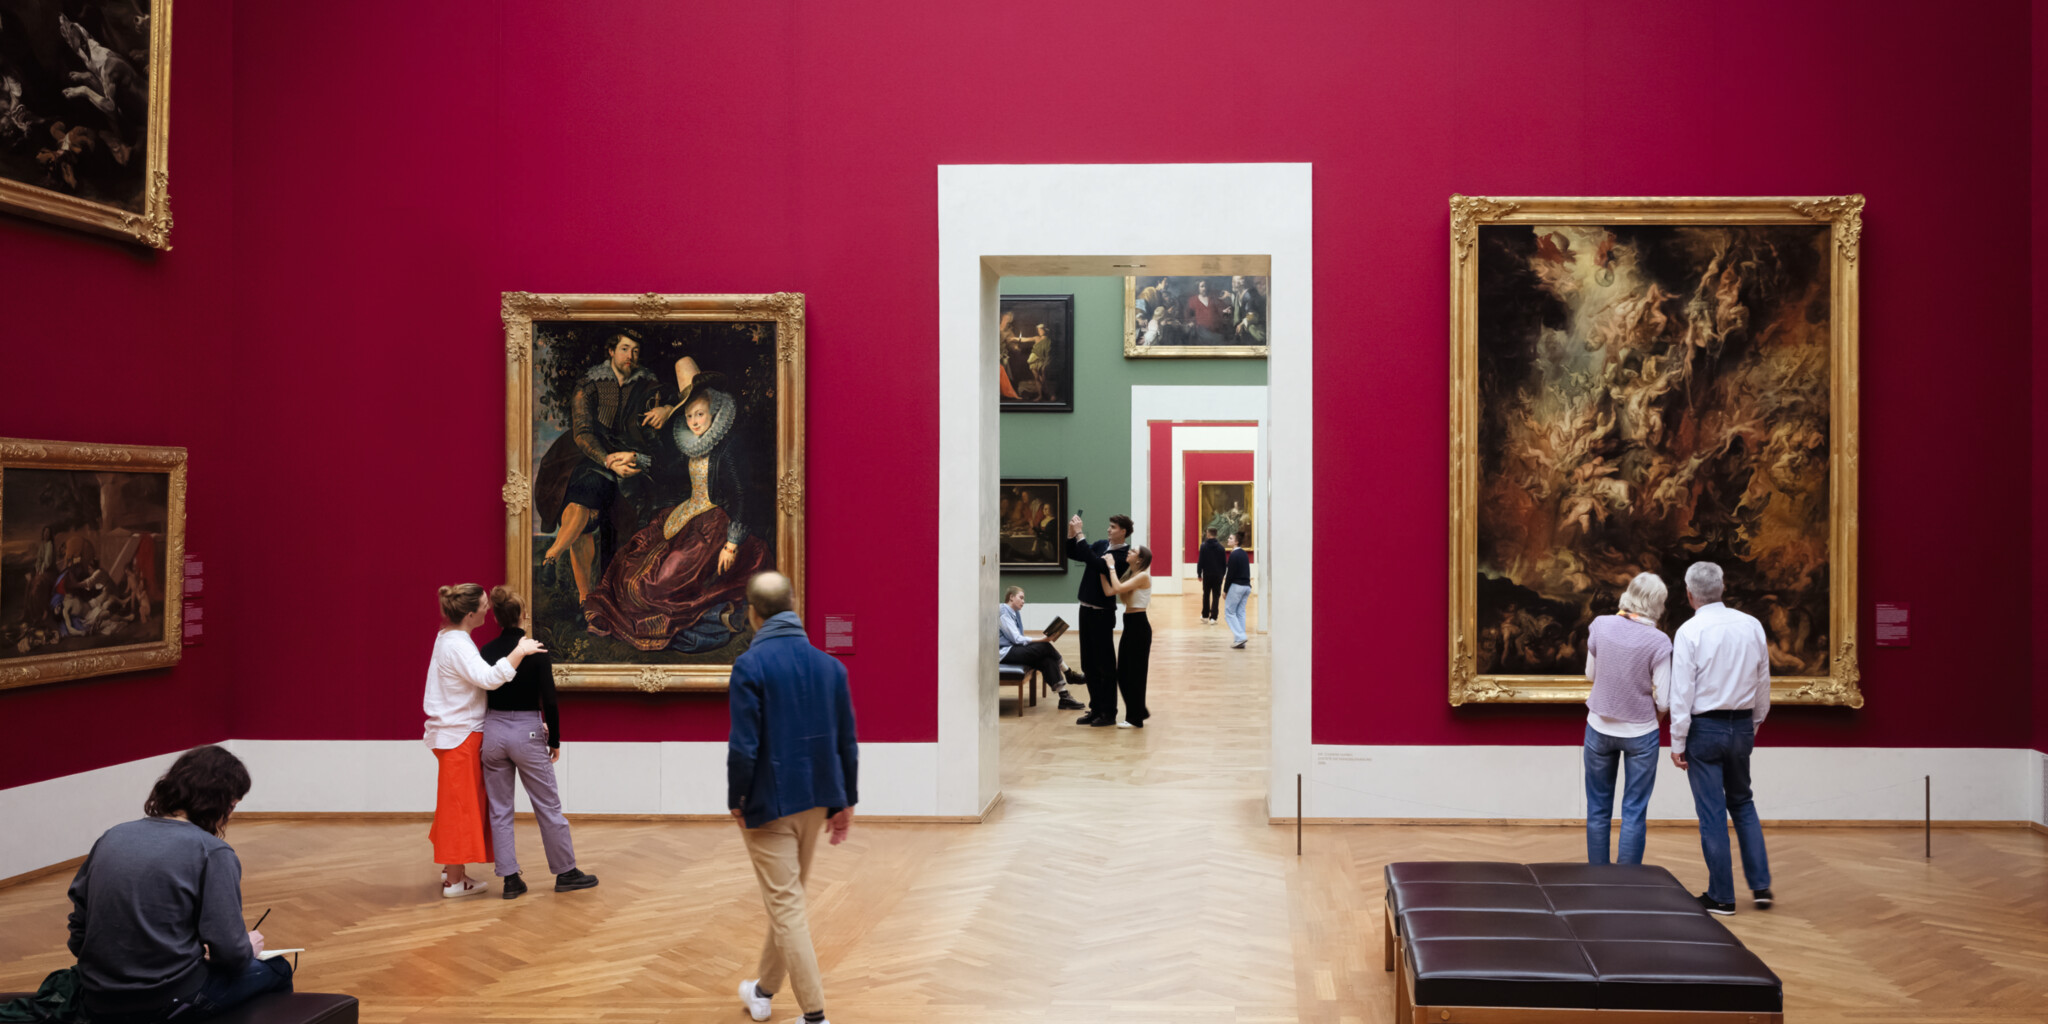 The Alte Pinakothek on Google Arts & Culture